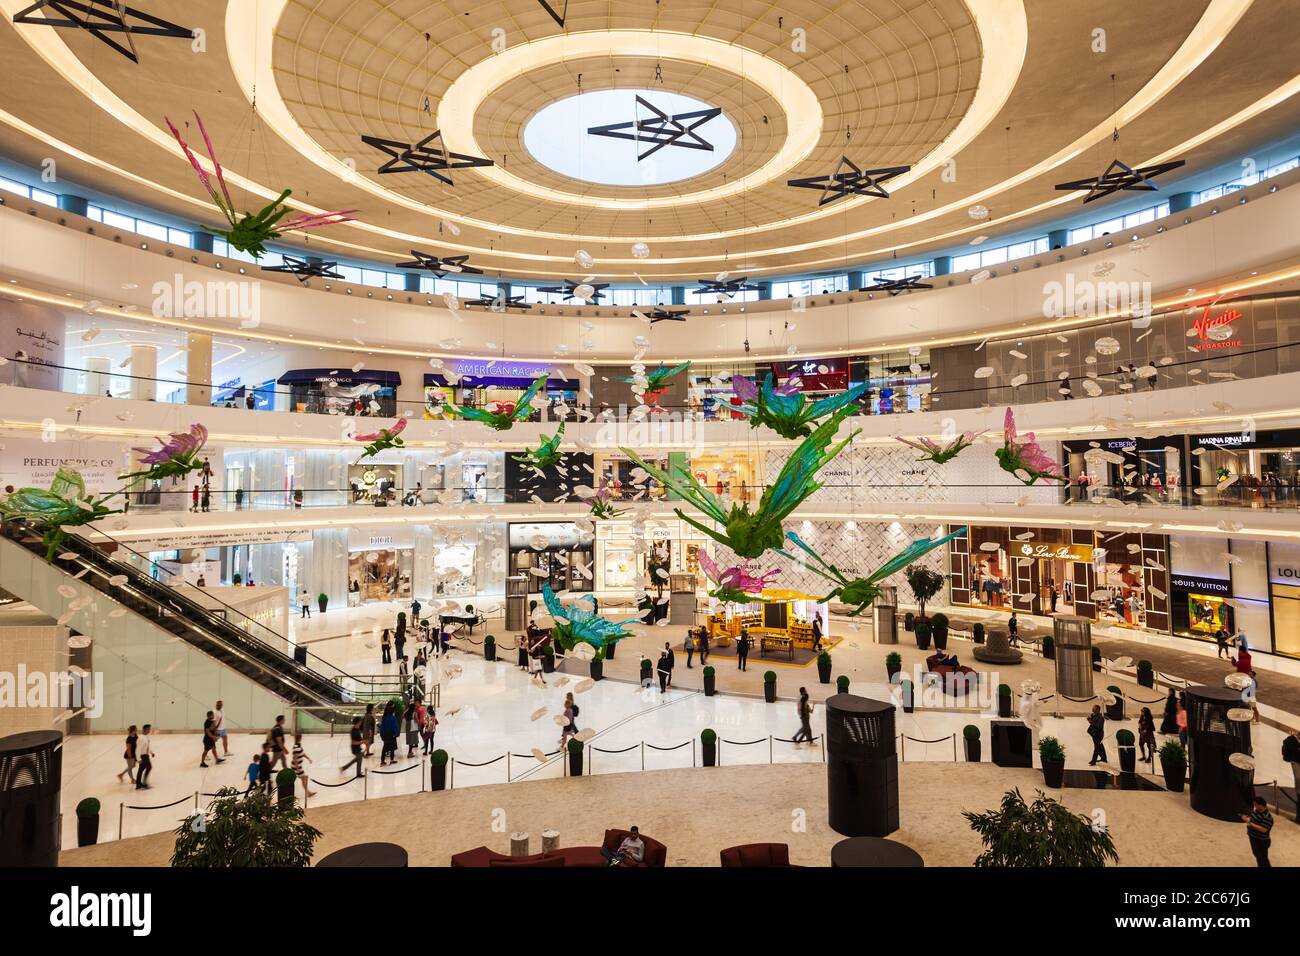 DUBAI, UAE - FEBRUARY 25, 2019: The Dubai Mall interior, the second largest shopping mall in the world located in Dubai in UAE Stock Photo